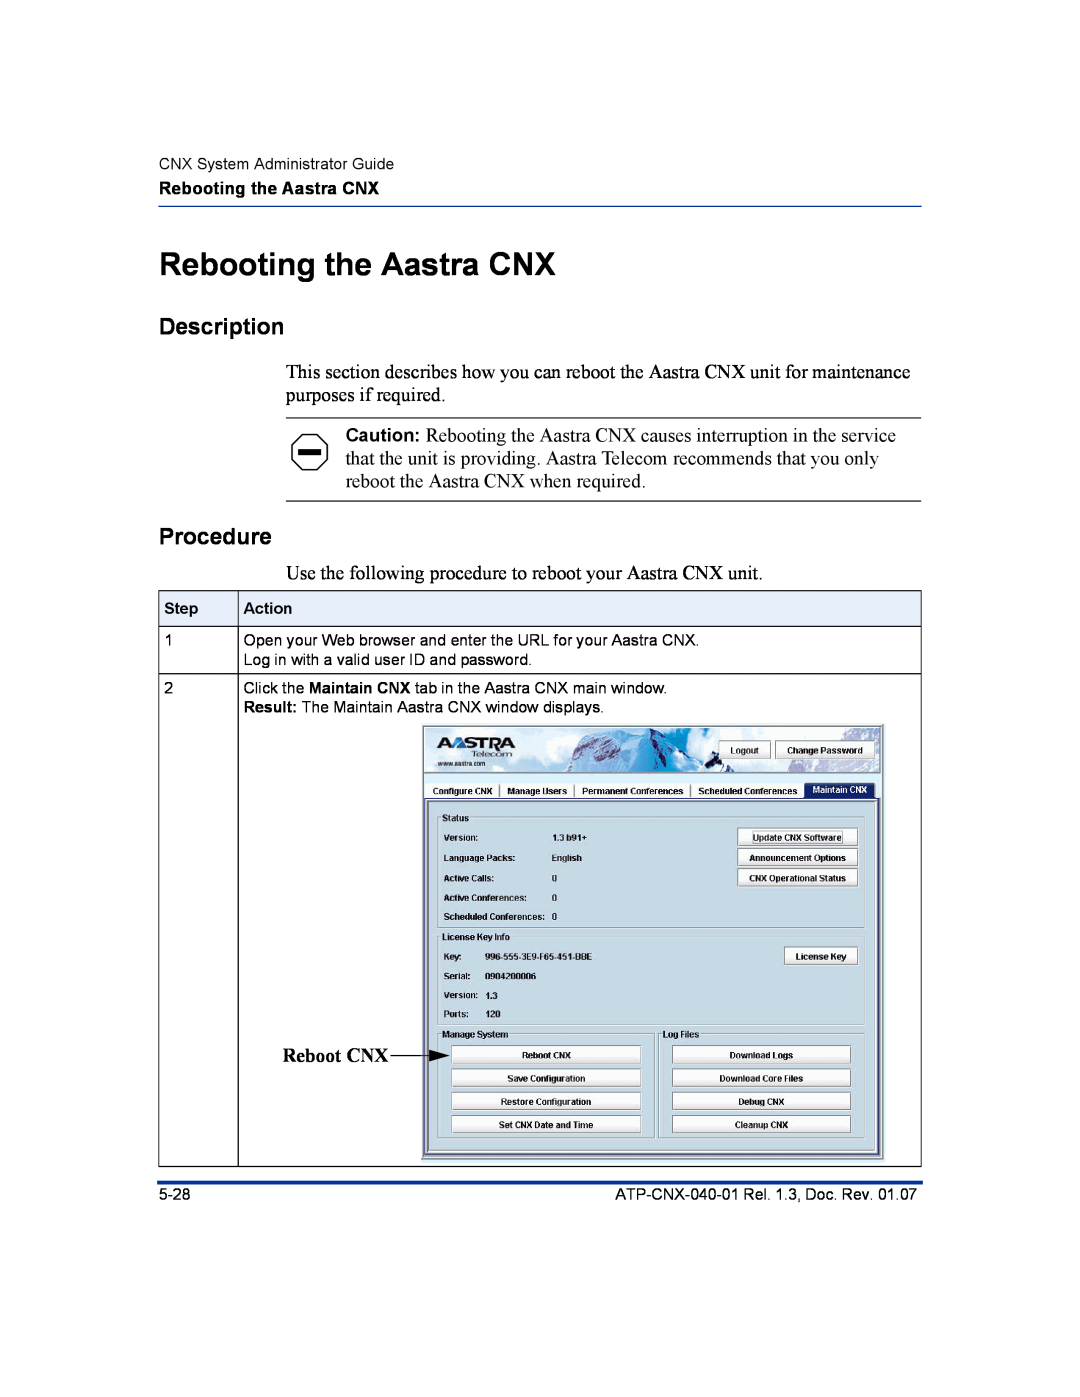 Aastra Telecom ATP-CNX-040-01 manual Rebooting the Aastra CNX, Reboot CNX, Description, Procedure 